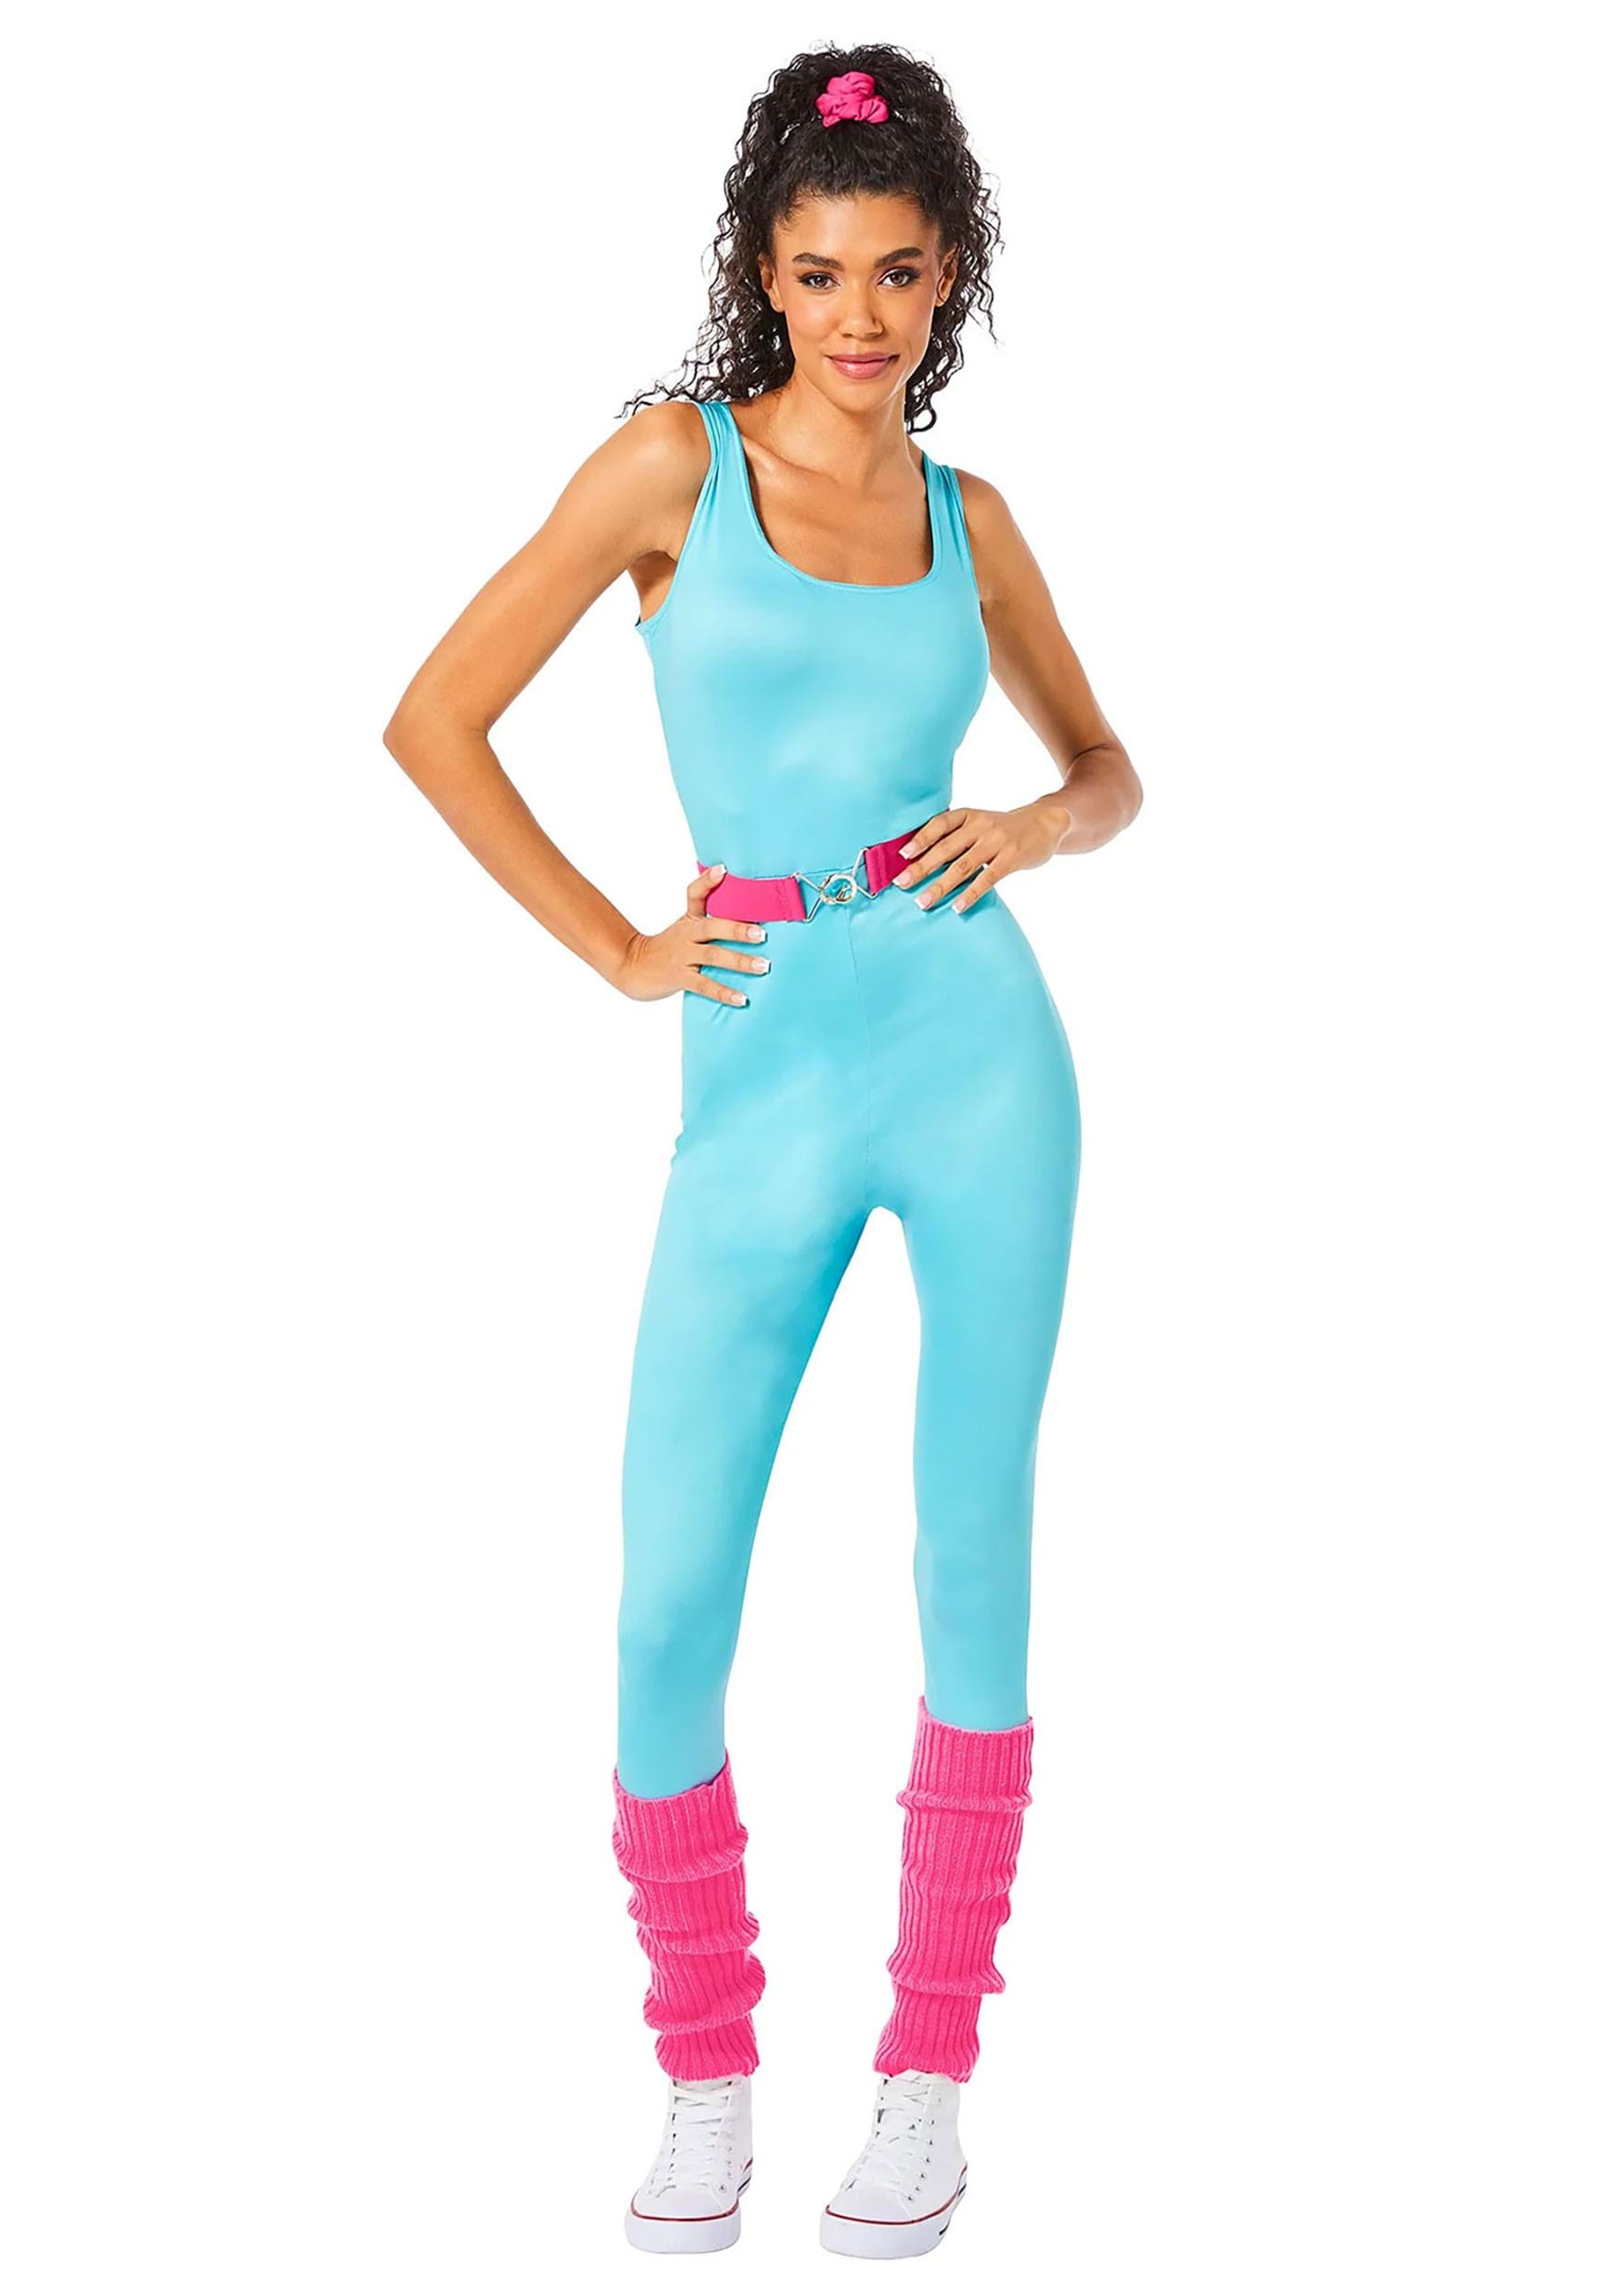 Classic Women's Aerobic Barbie Fancy Dress Costume